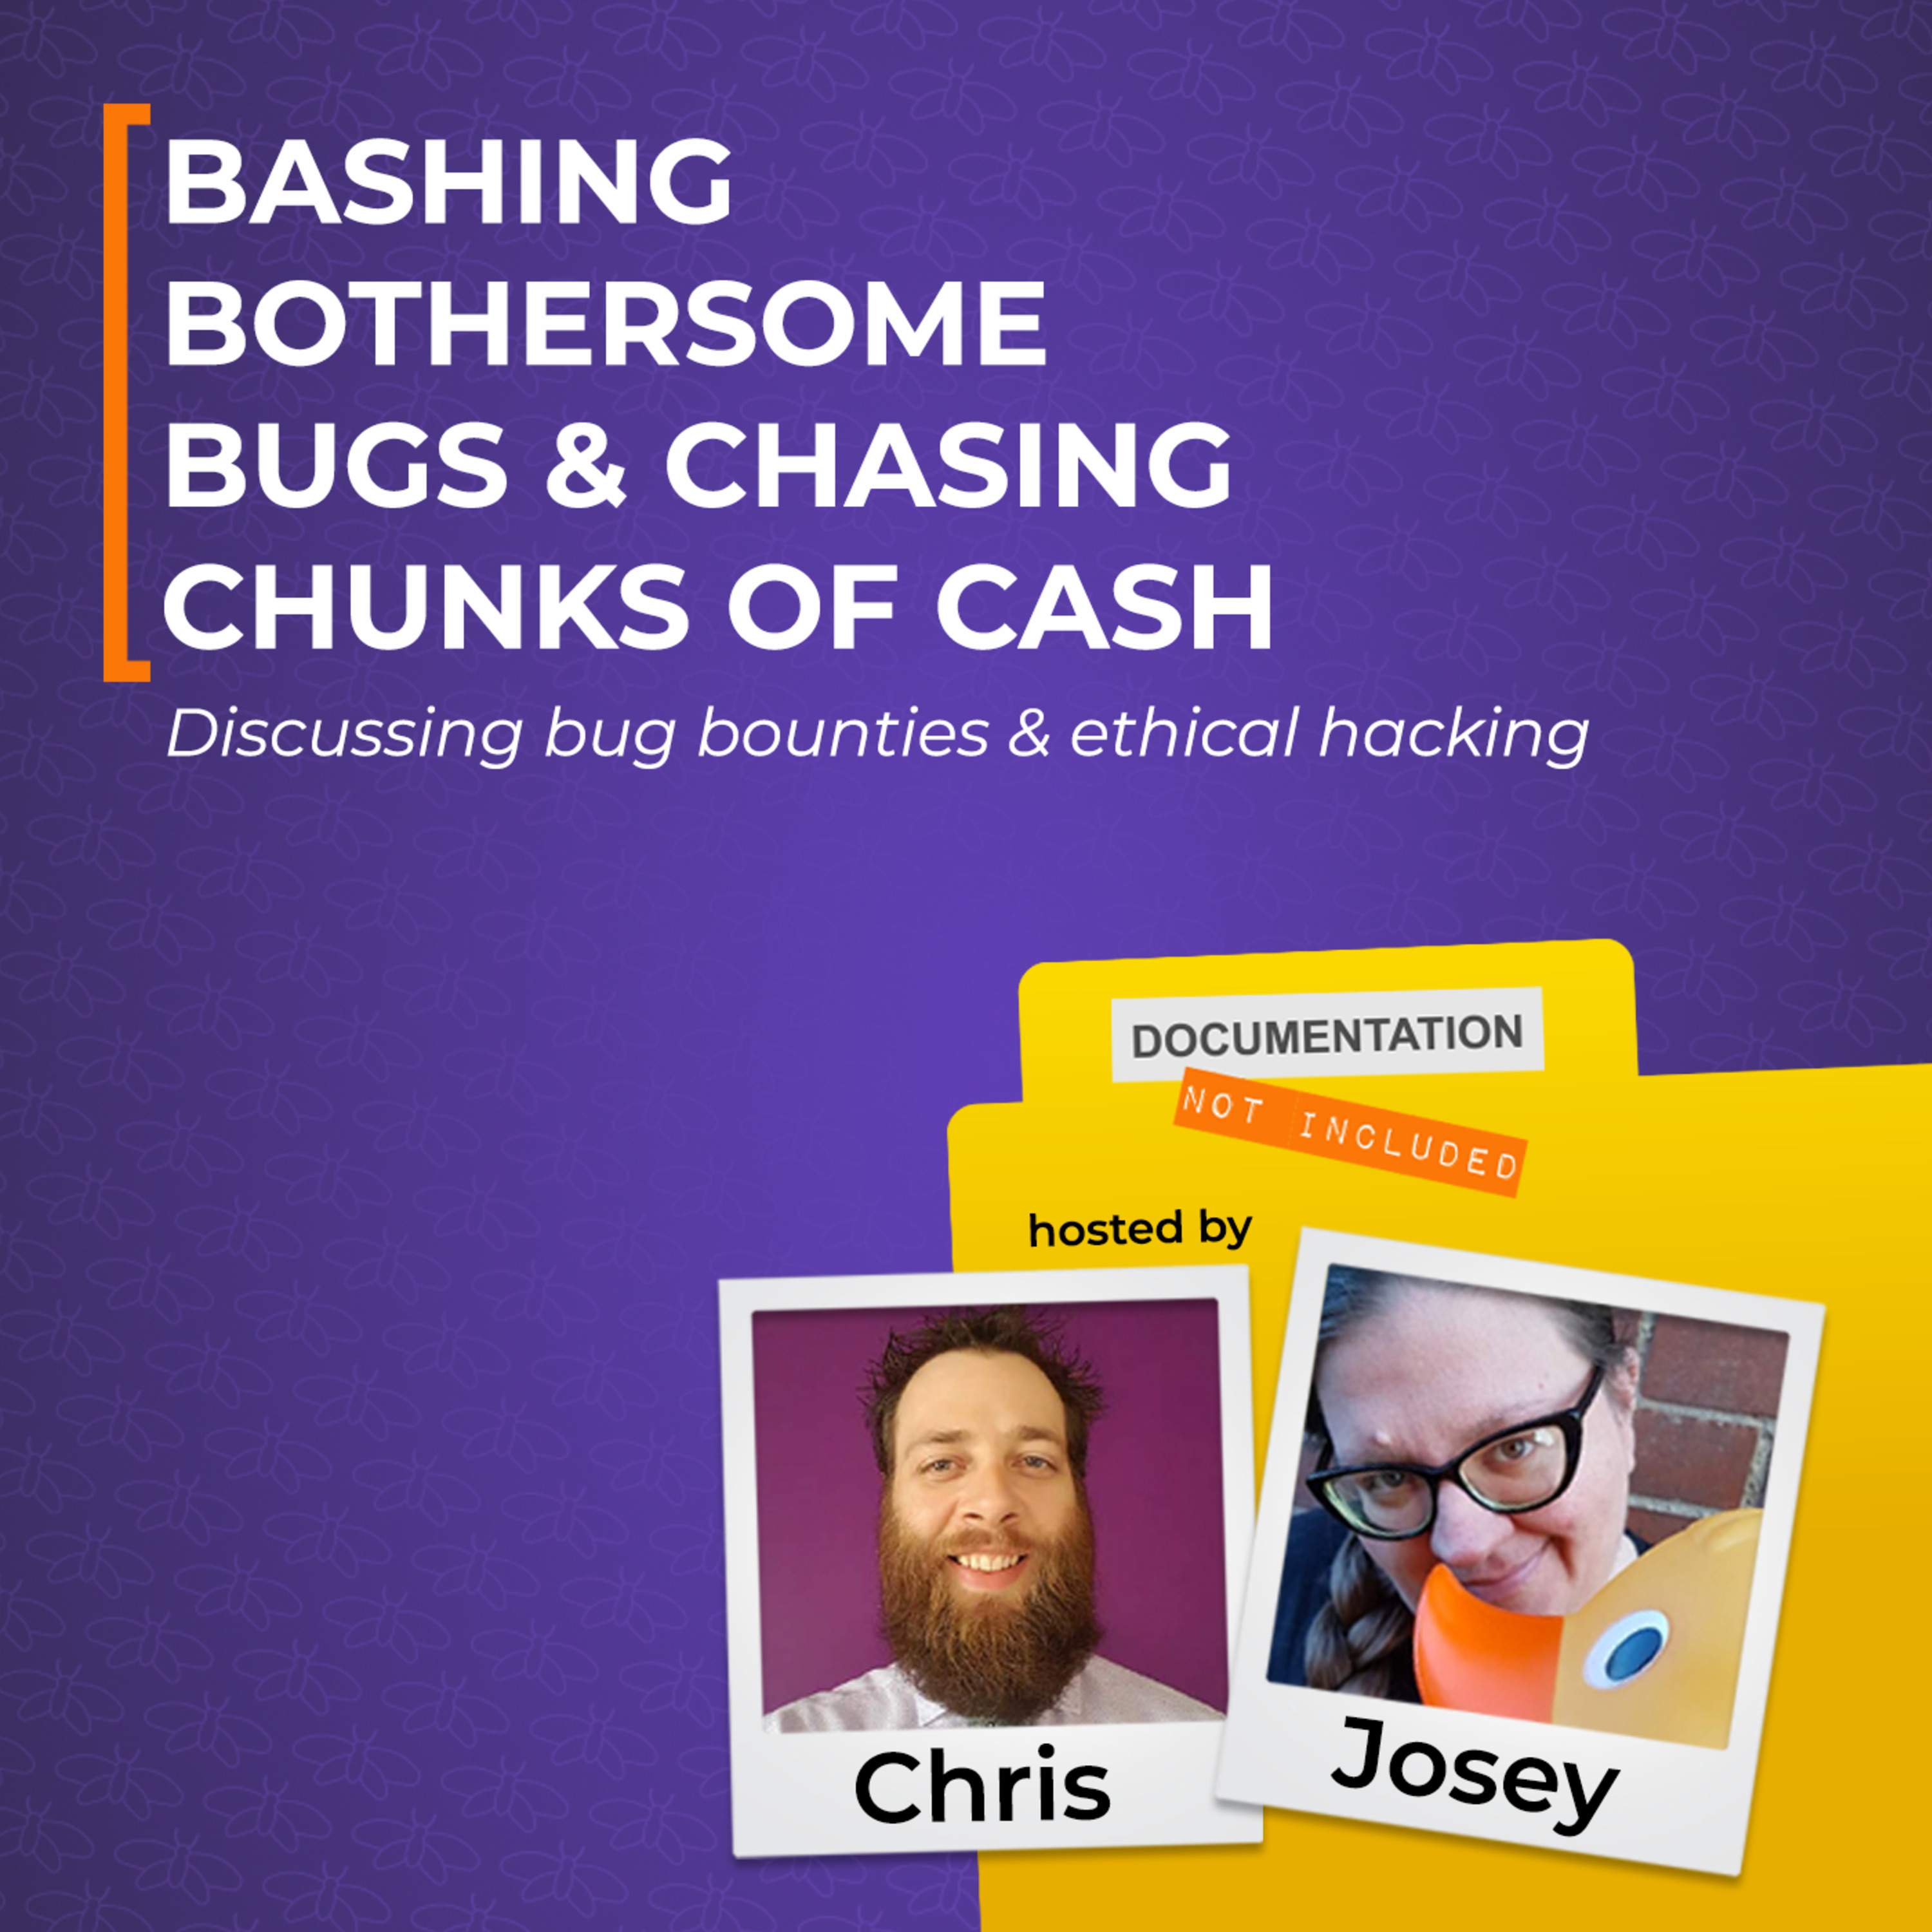 Bashing Bothersome Bugs & Chasing Chunks of Cash